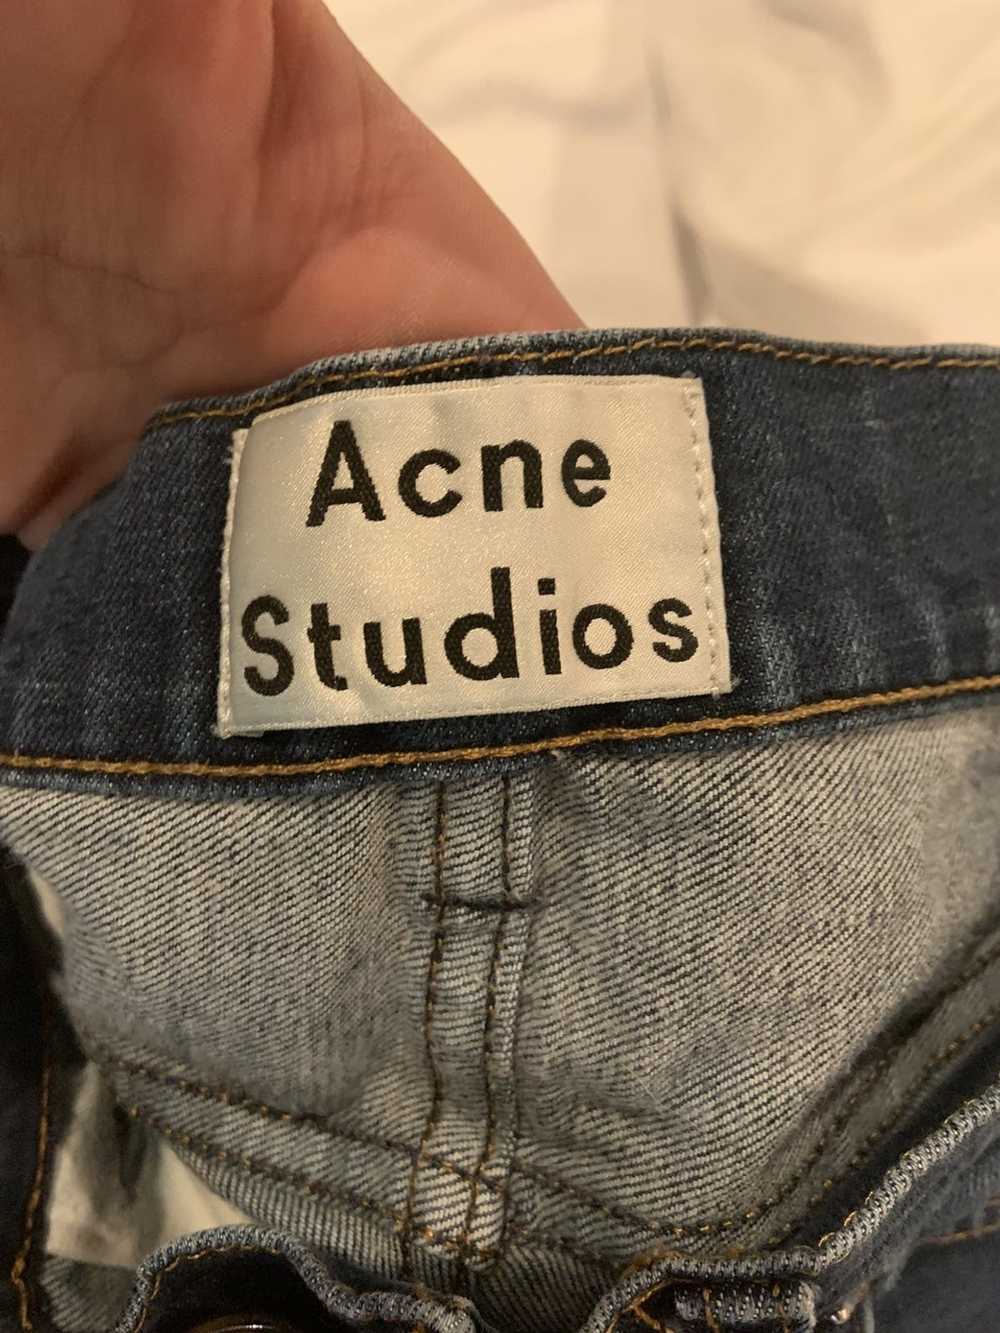 Acne Studios Acne Studios jeans - image 2